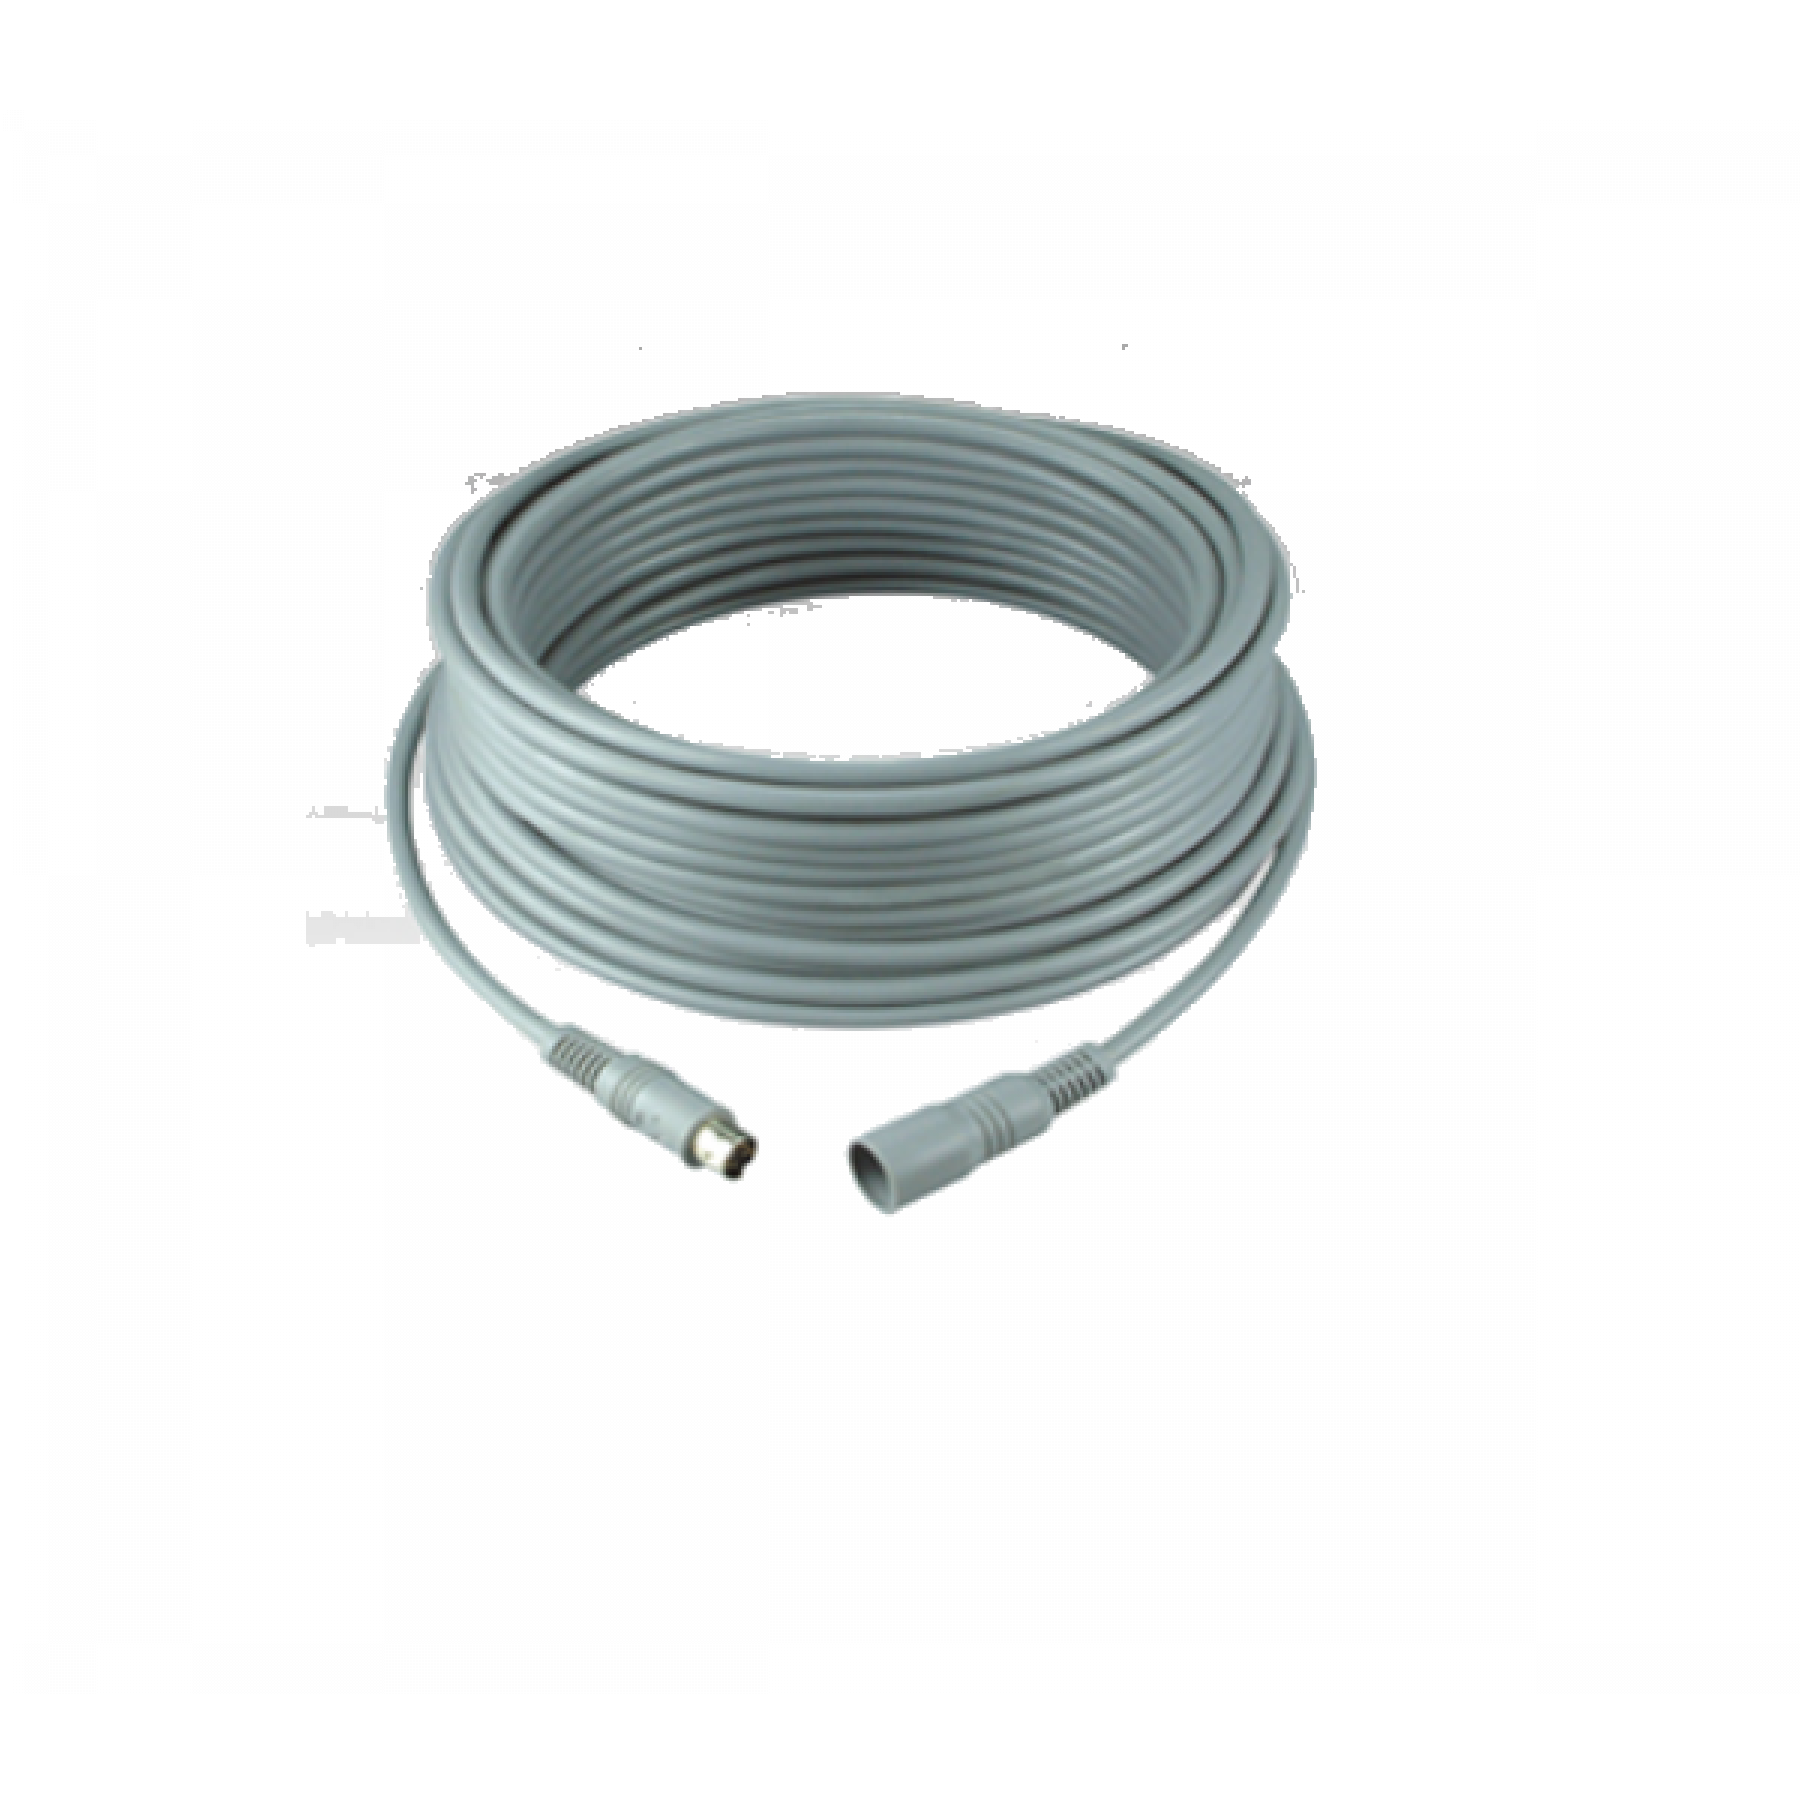 PSVT Kabel 20m 6 pins grijs (geen wartel)